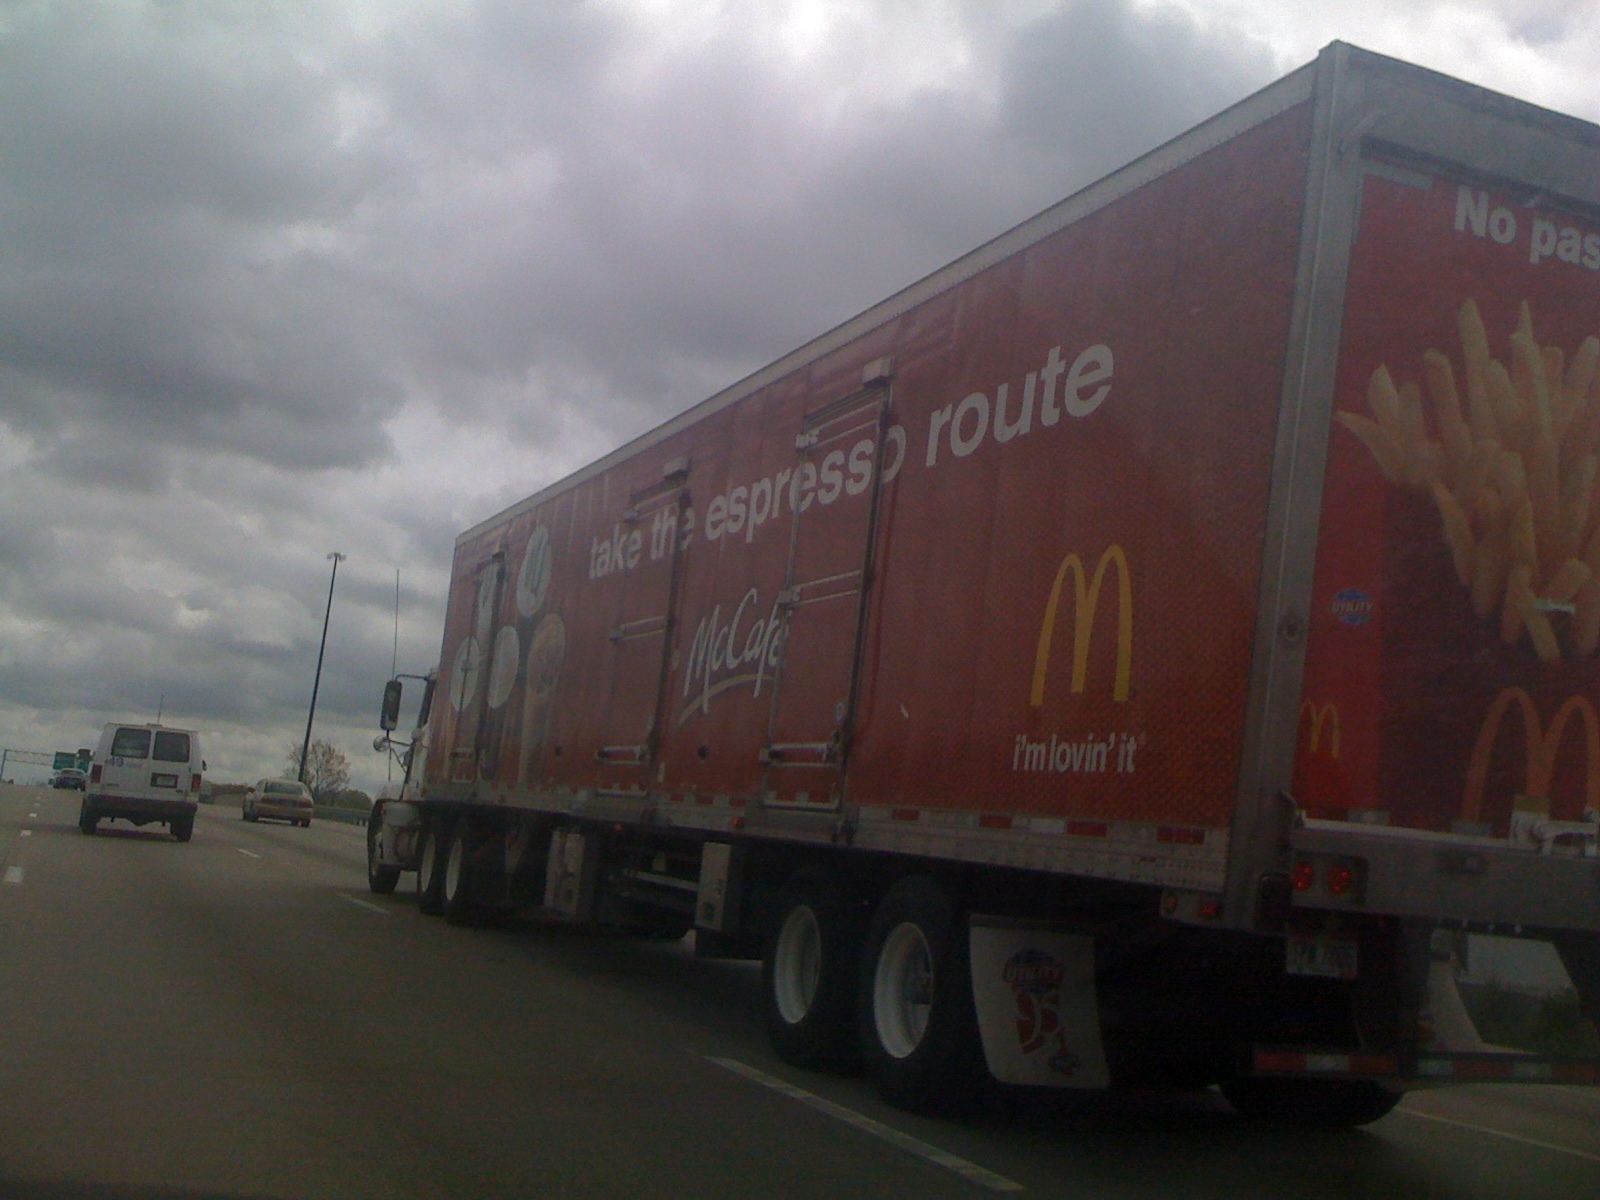 This McDonald’s truck is a billboard!